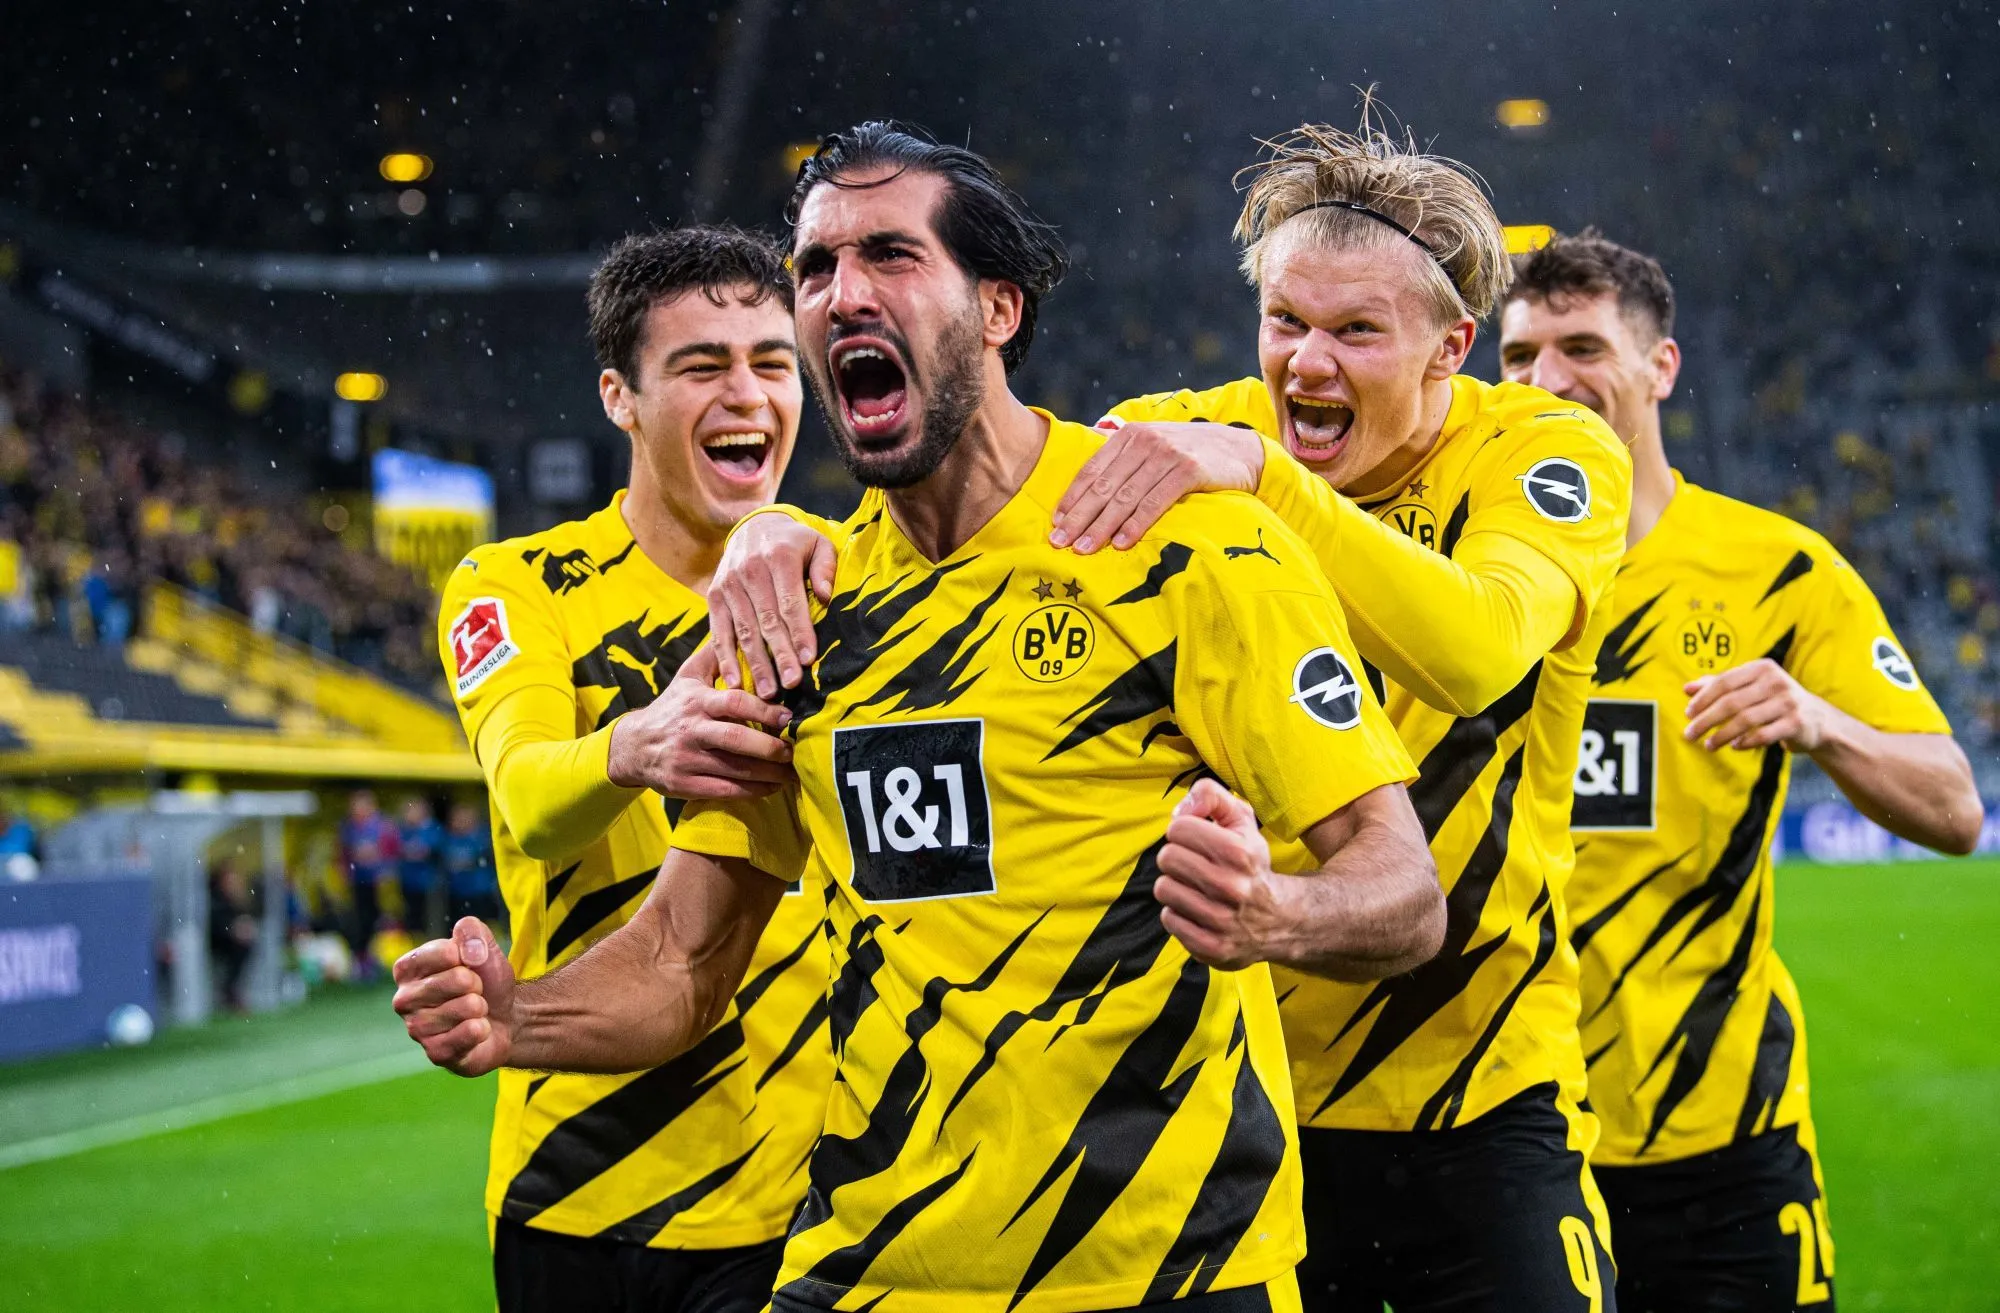 Pronostic Dortmund Schalke : Analyse, cotes et prono du match de Bundesliga